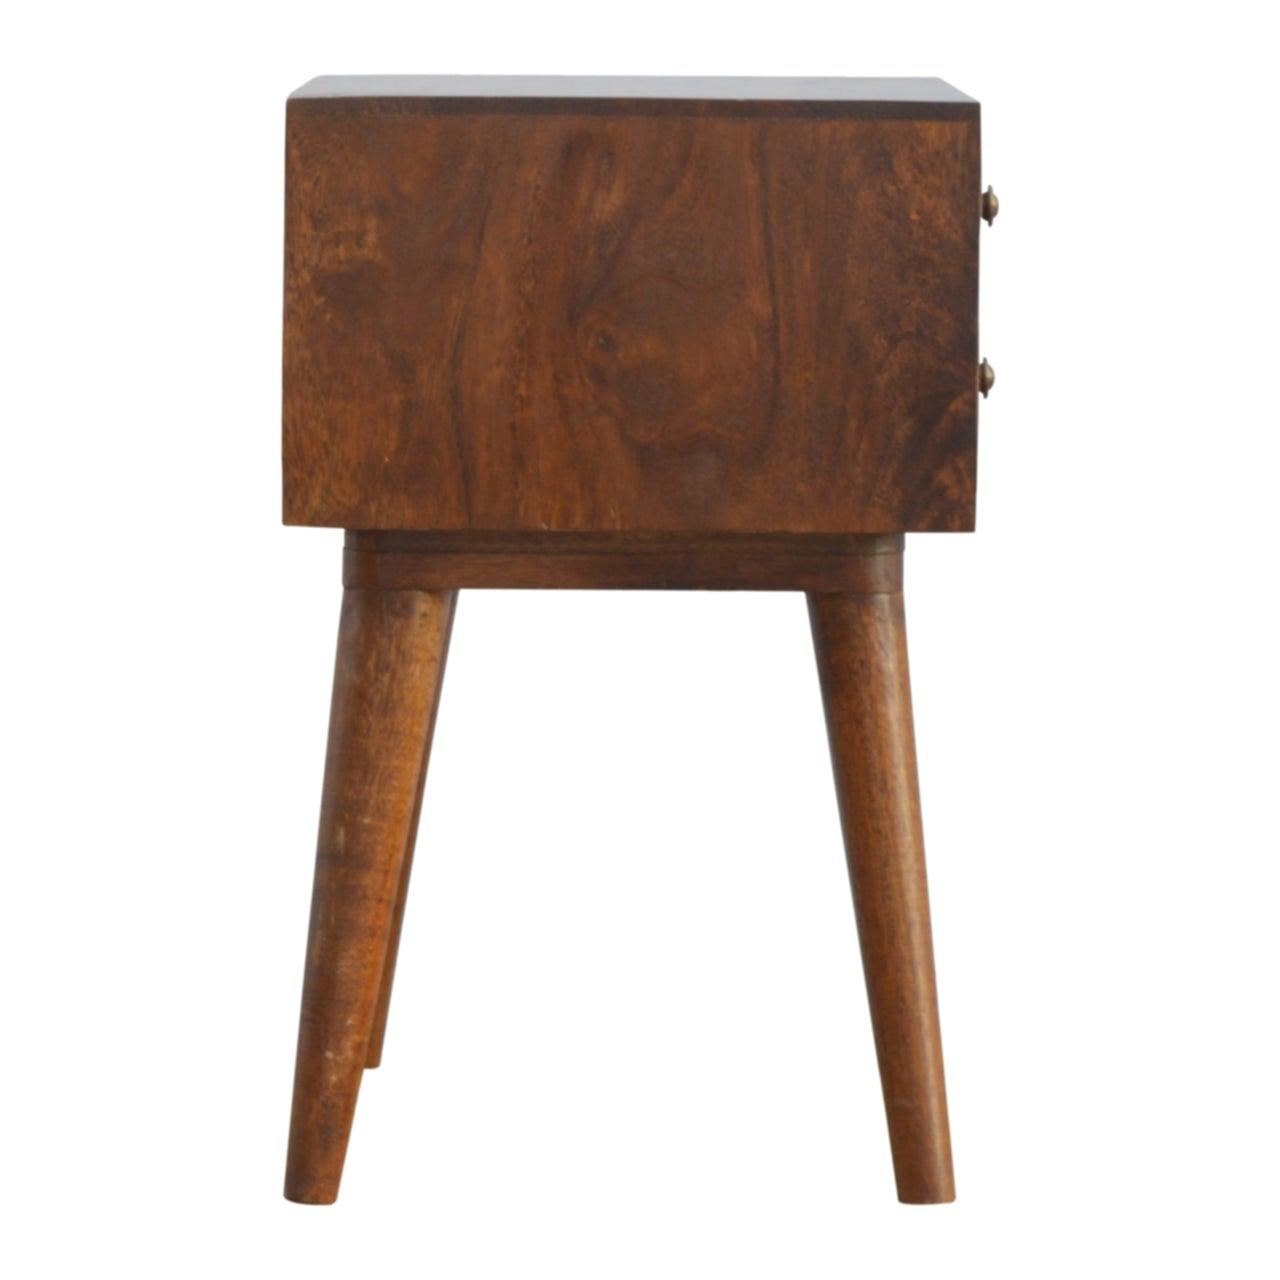 Geometric brass inlay 2 drawer bedside table - crimblefest furniture - image 8